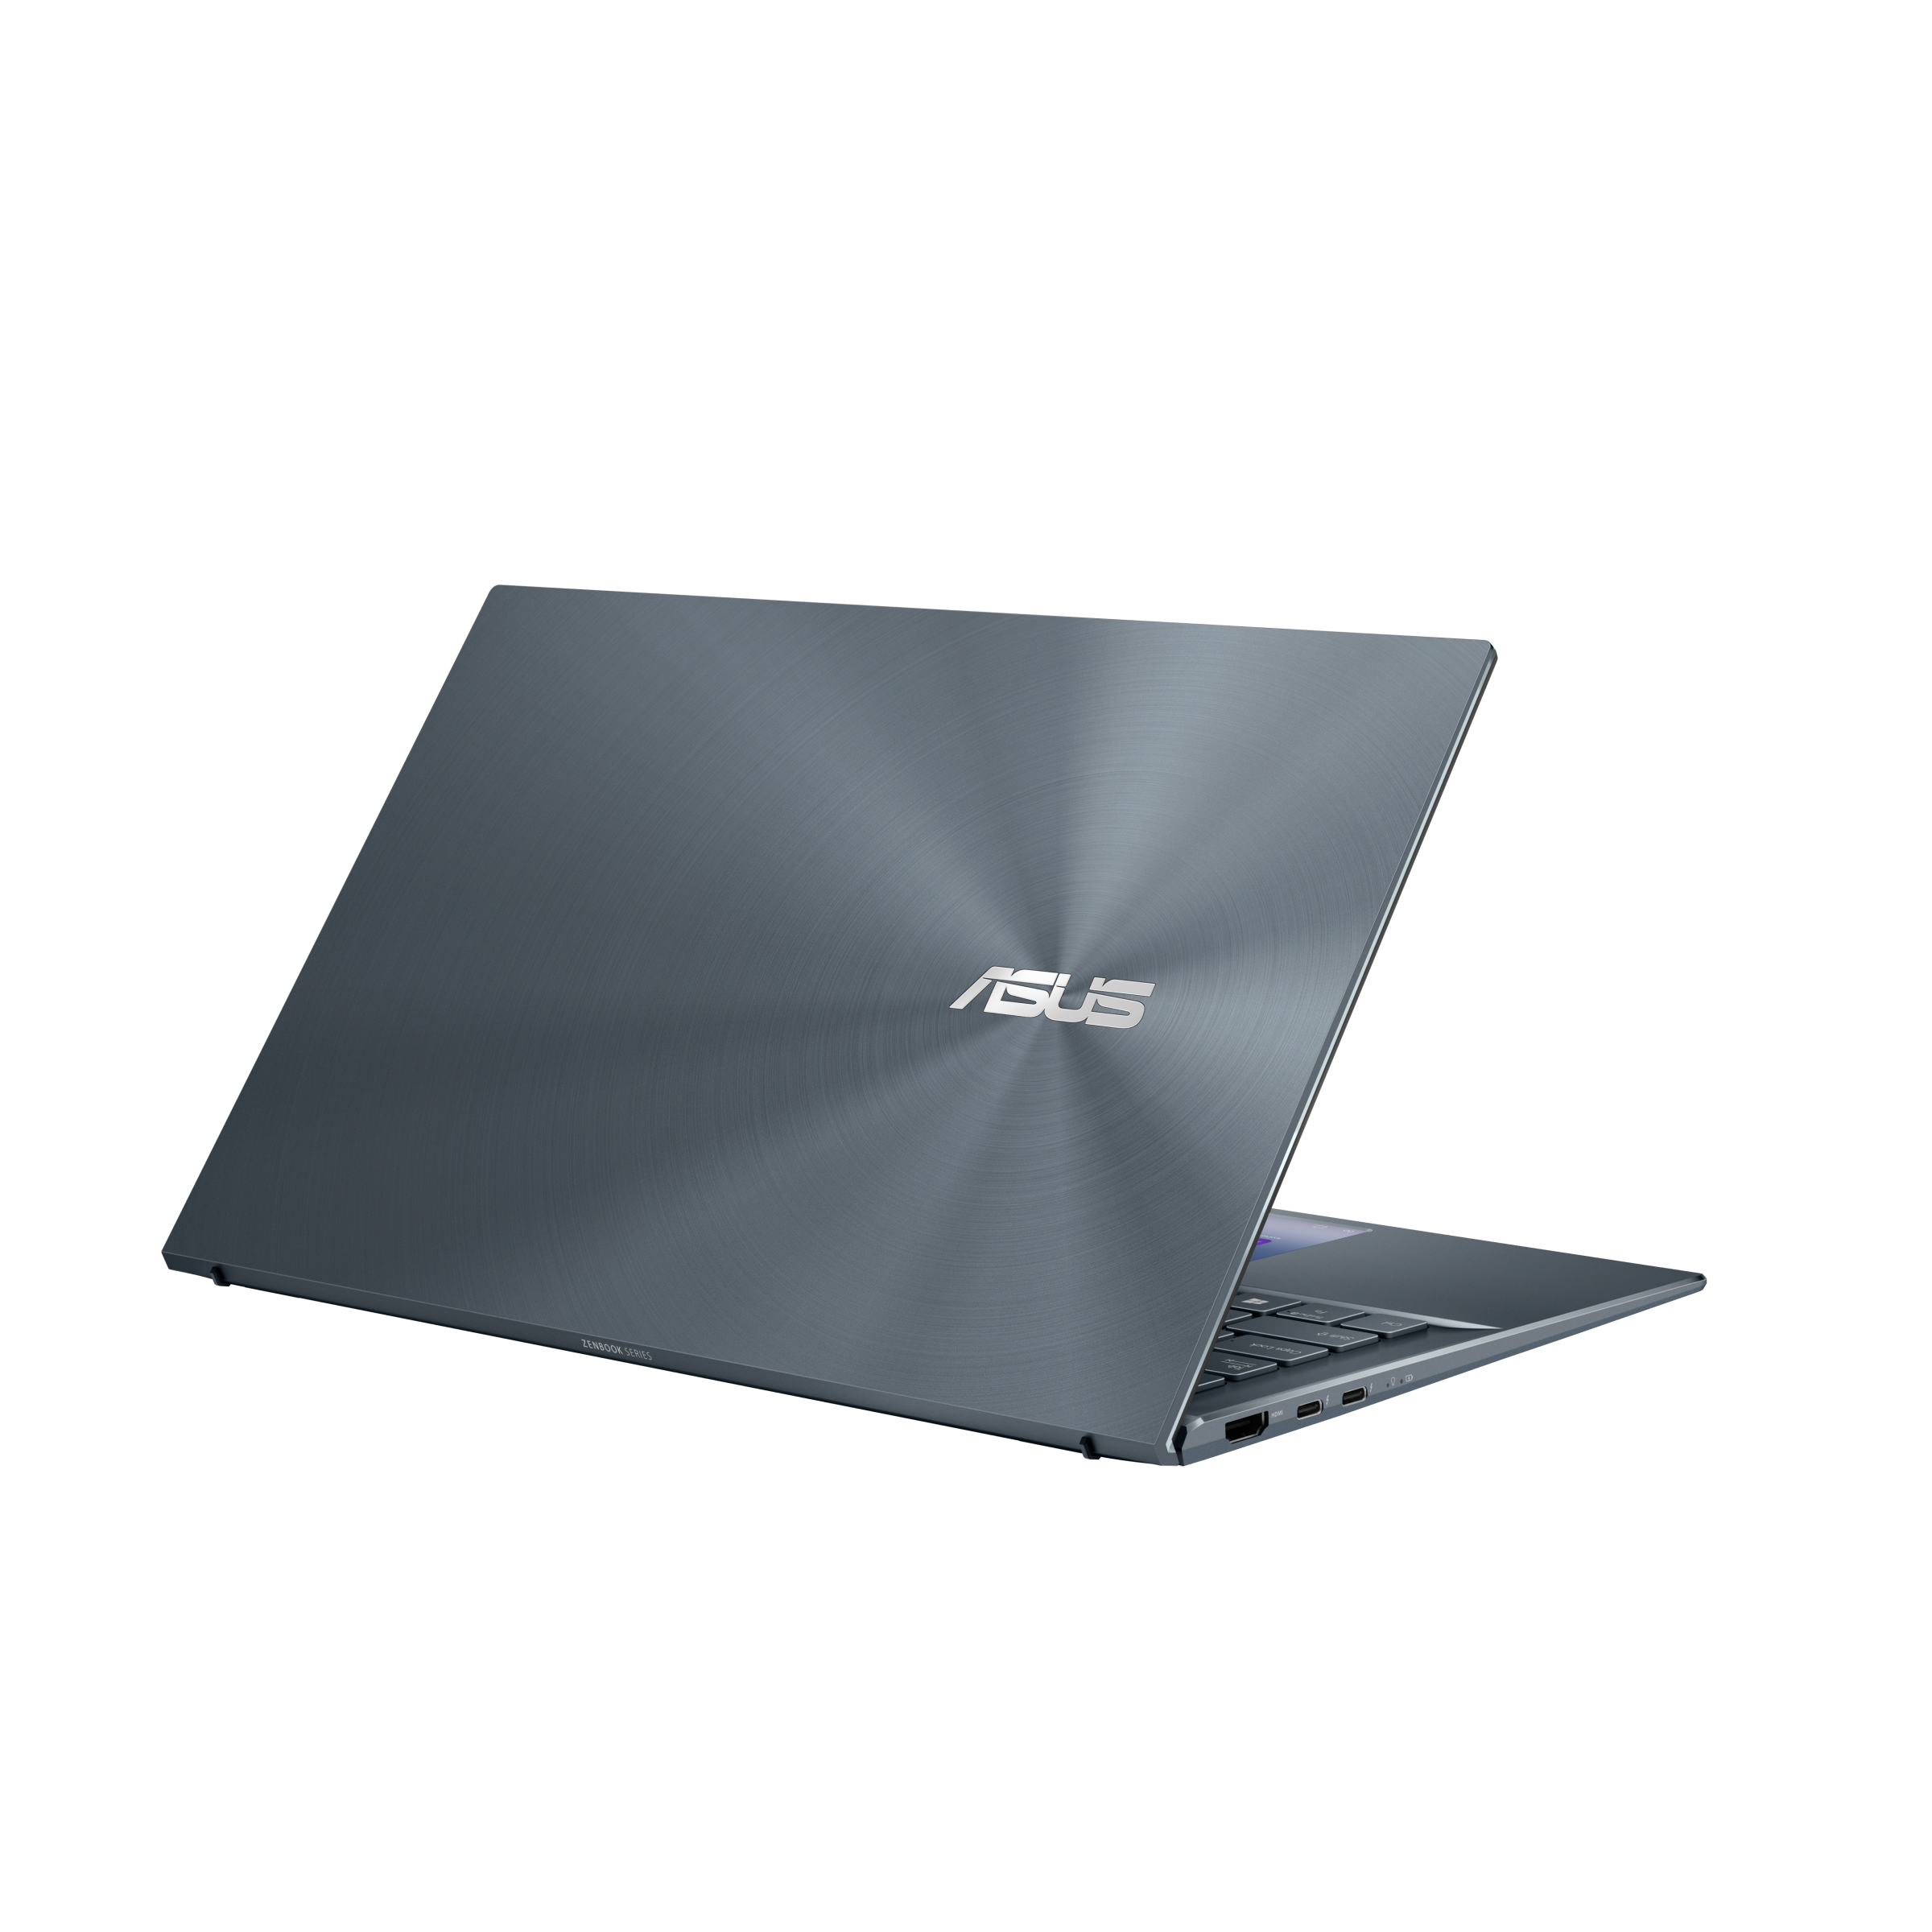 ASUS ZenBook 14 Ultra-Slim Laptop 14” Full HD NanoEdge Display, Intel Core  i7-1165G7, 8GB RAM, 512GB PCIe SSD, NumberPad, Thunderbolt 4, Windows 10 H 